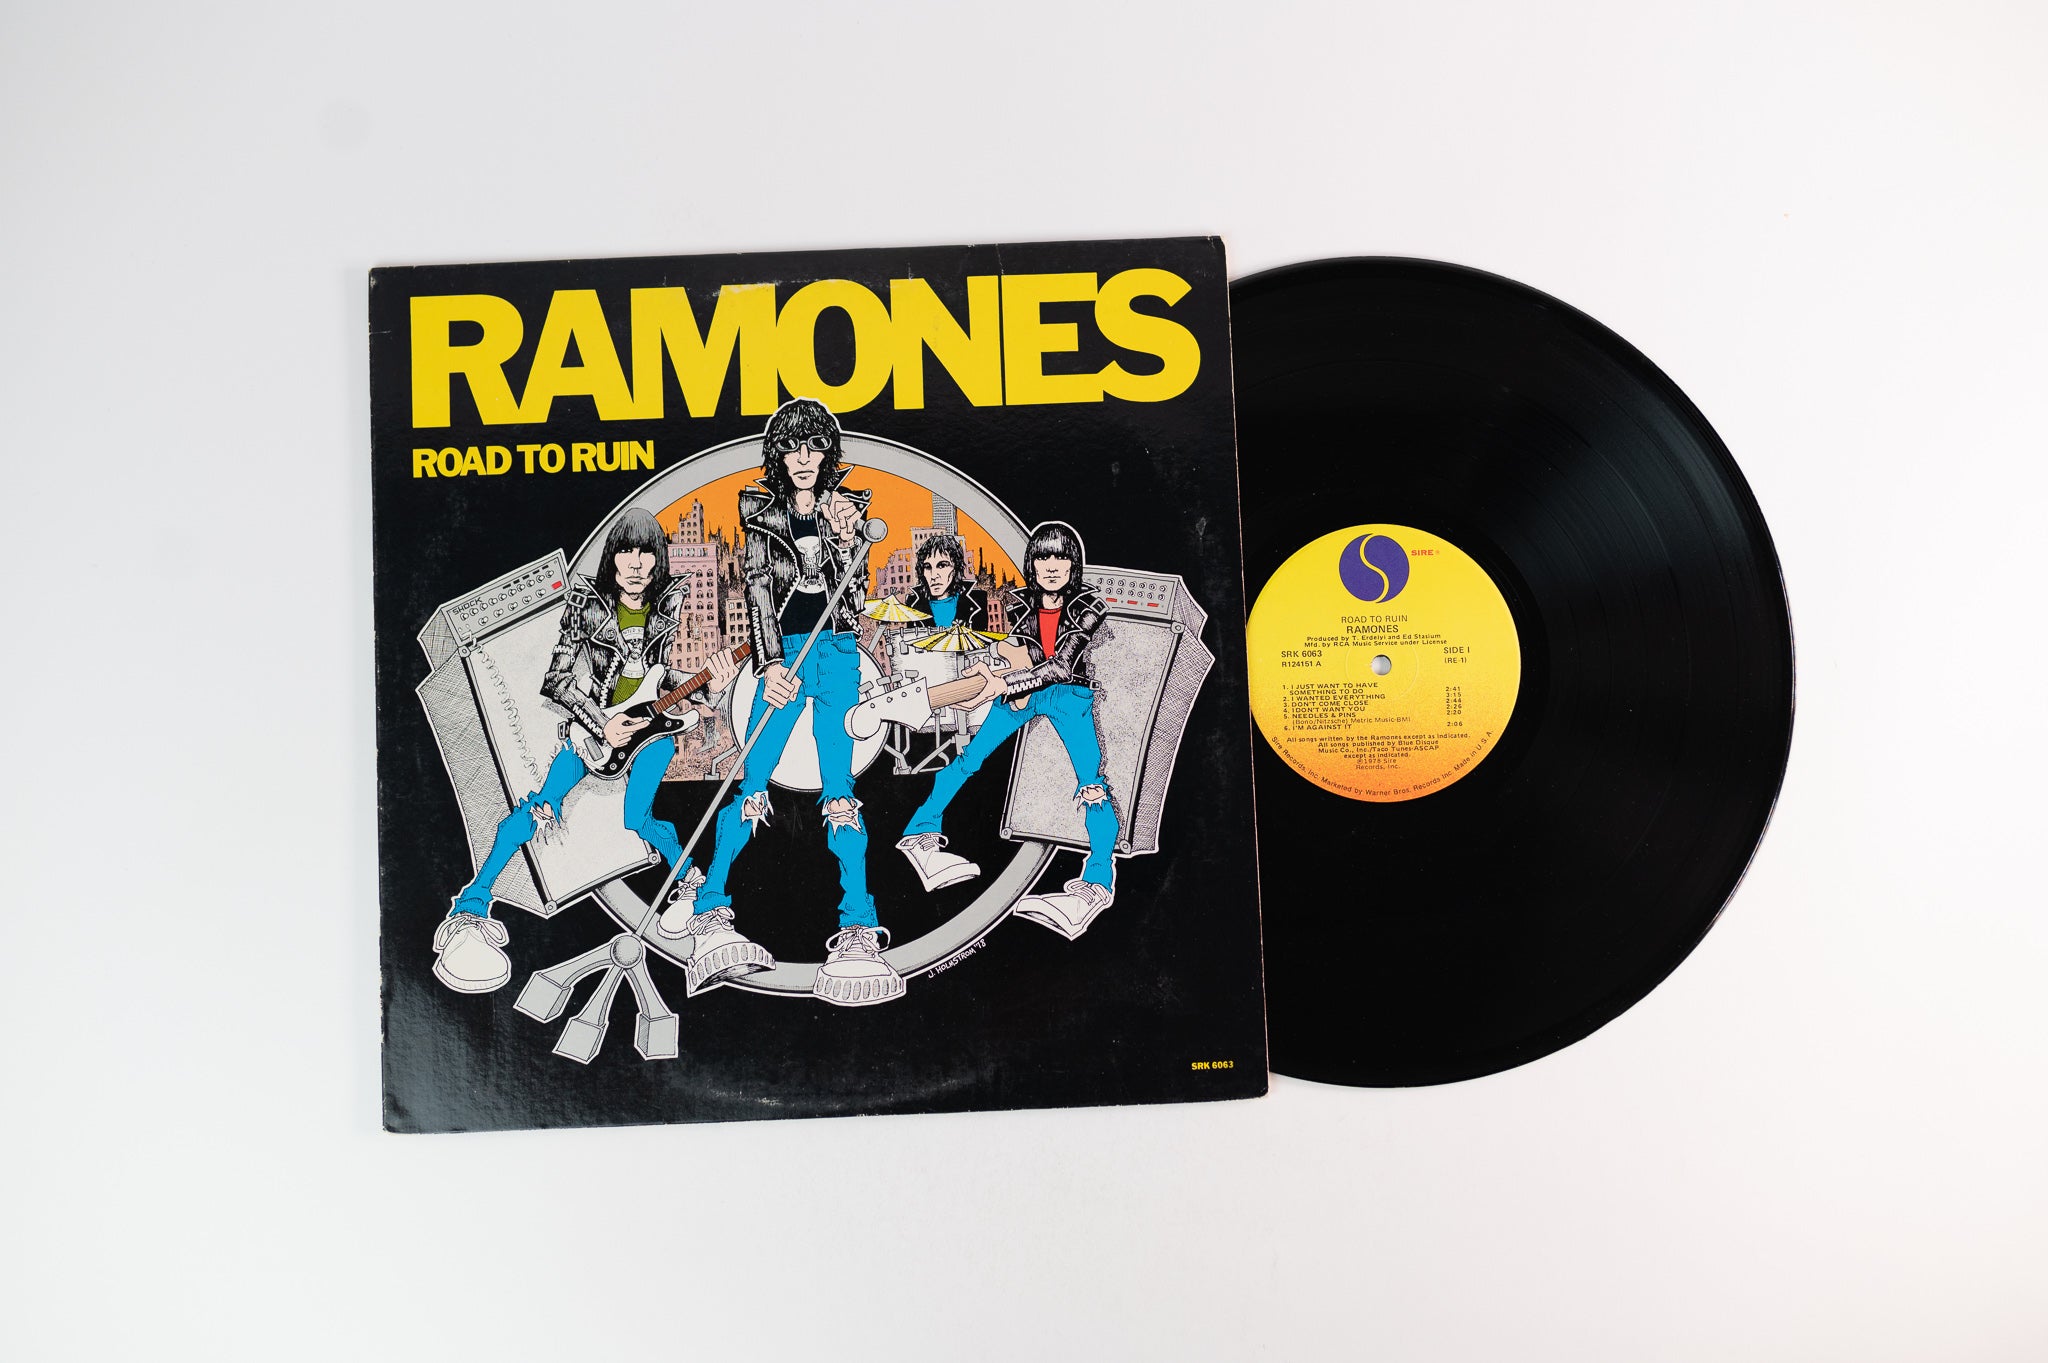 Ramones - Road To Ruin on Sire